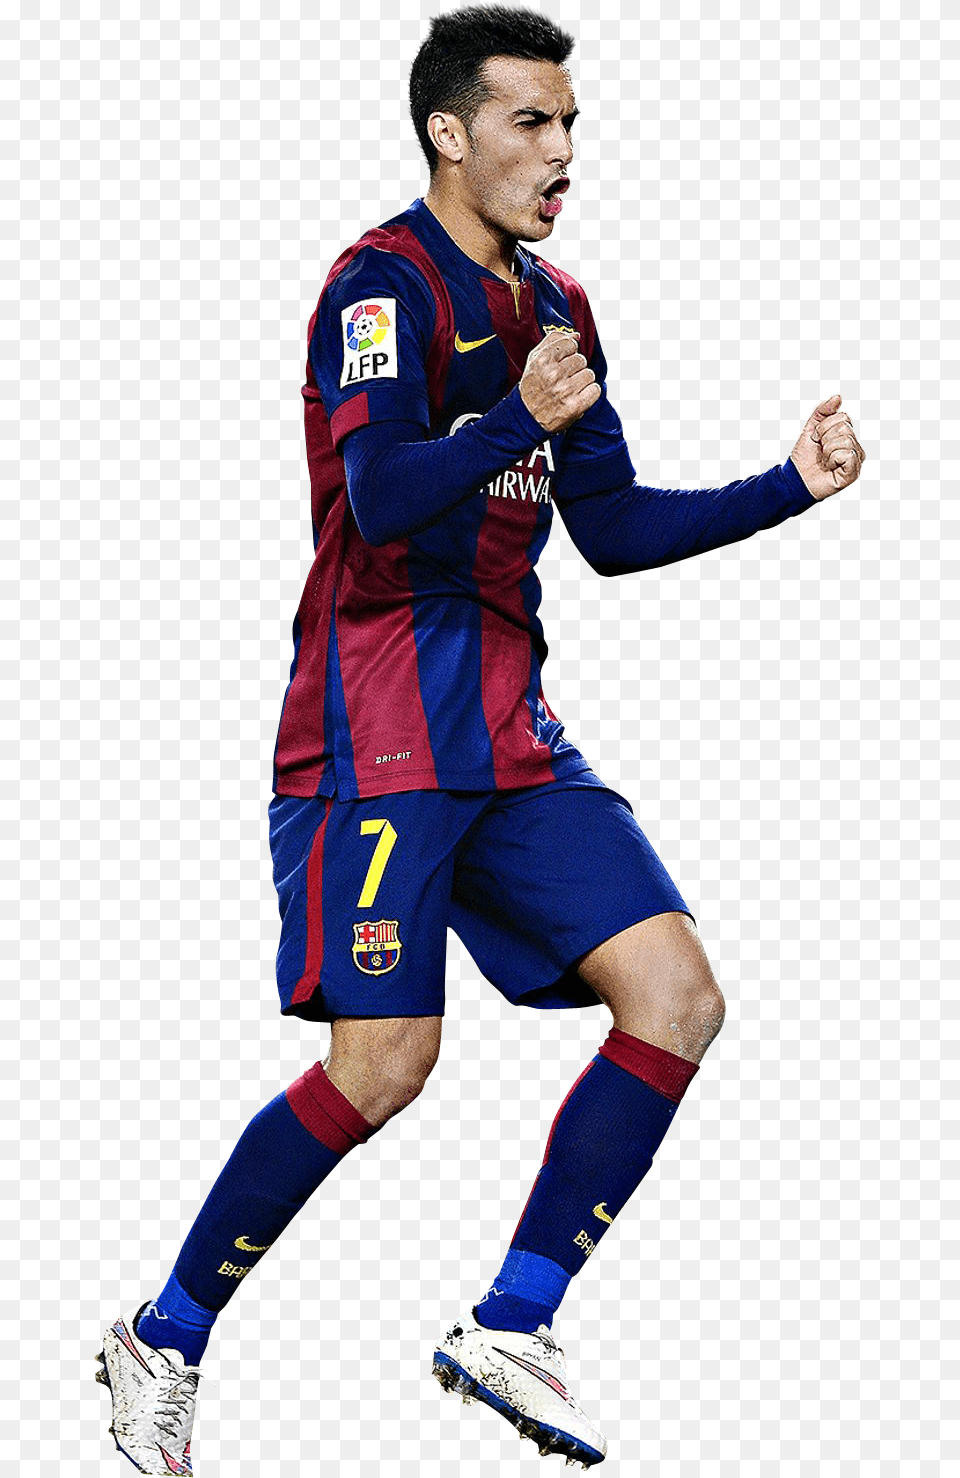 Pedro Rodriguez Fc Barcelona Player, Body Part, Shoe, Clothing, Shirt Png Image